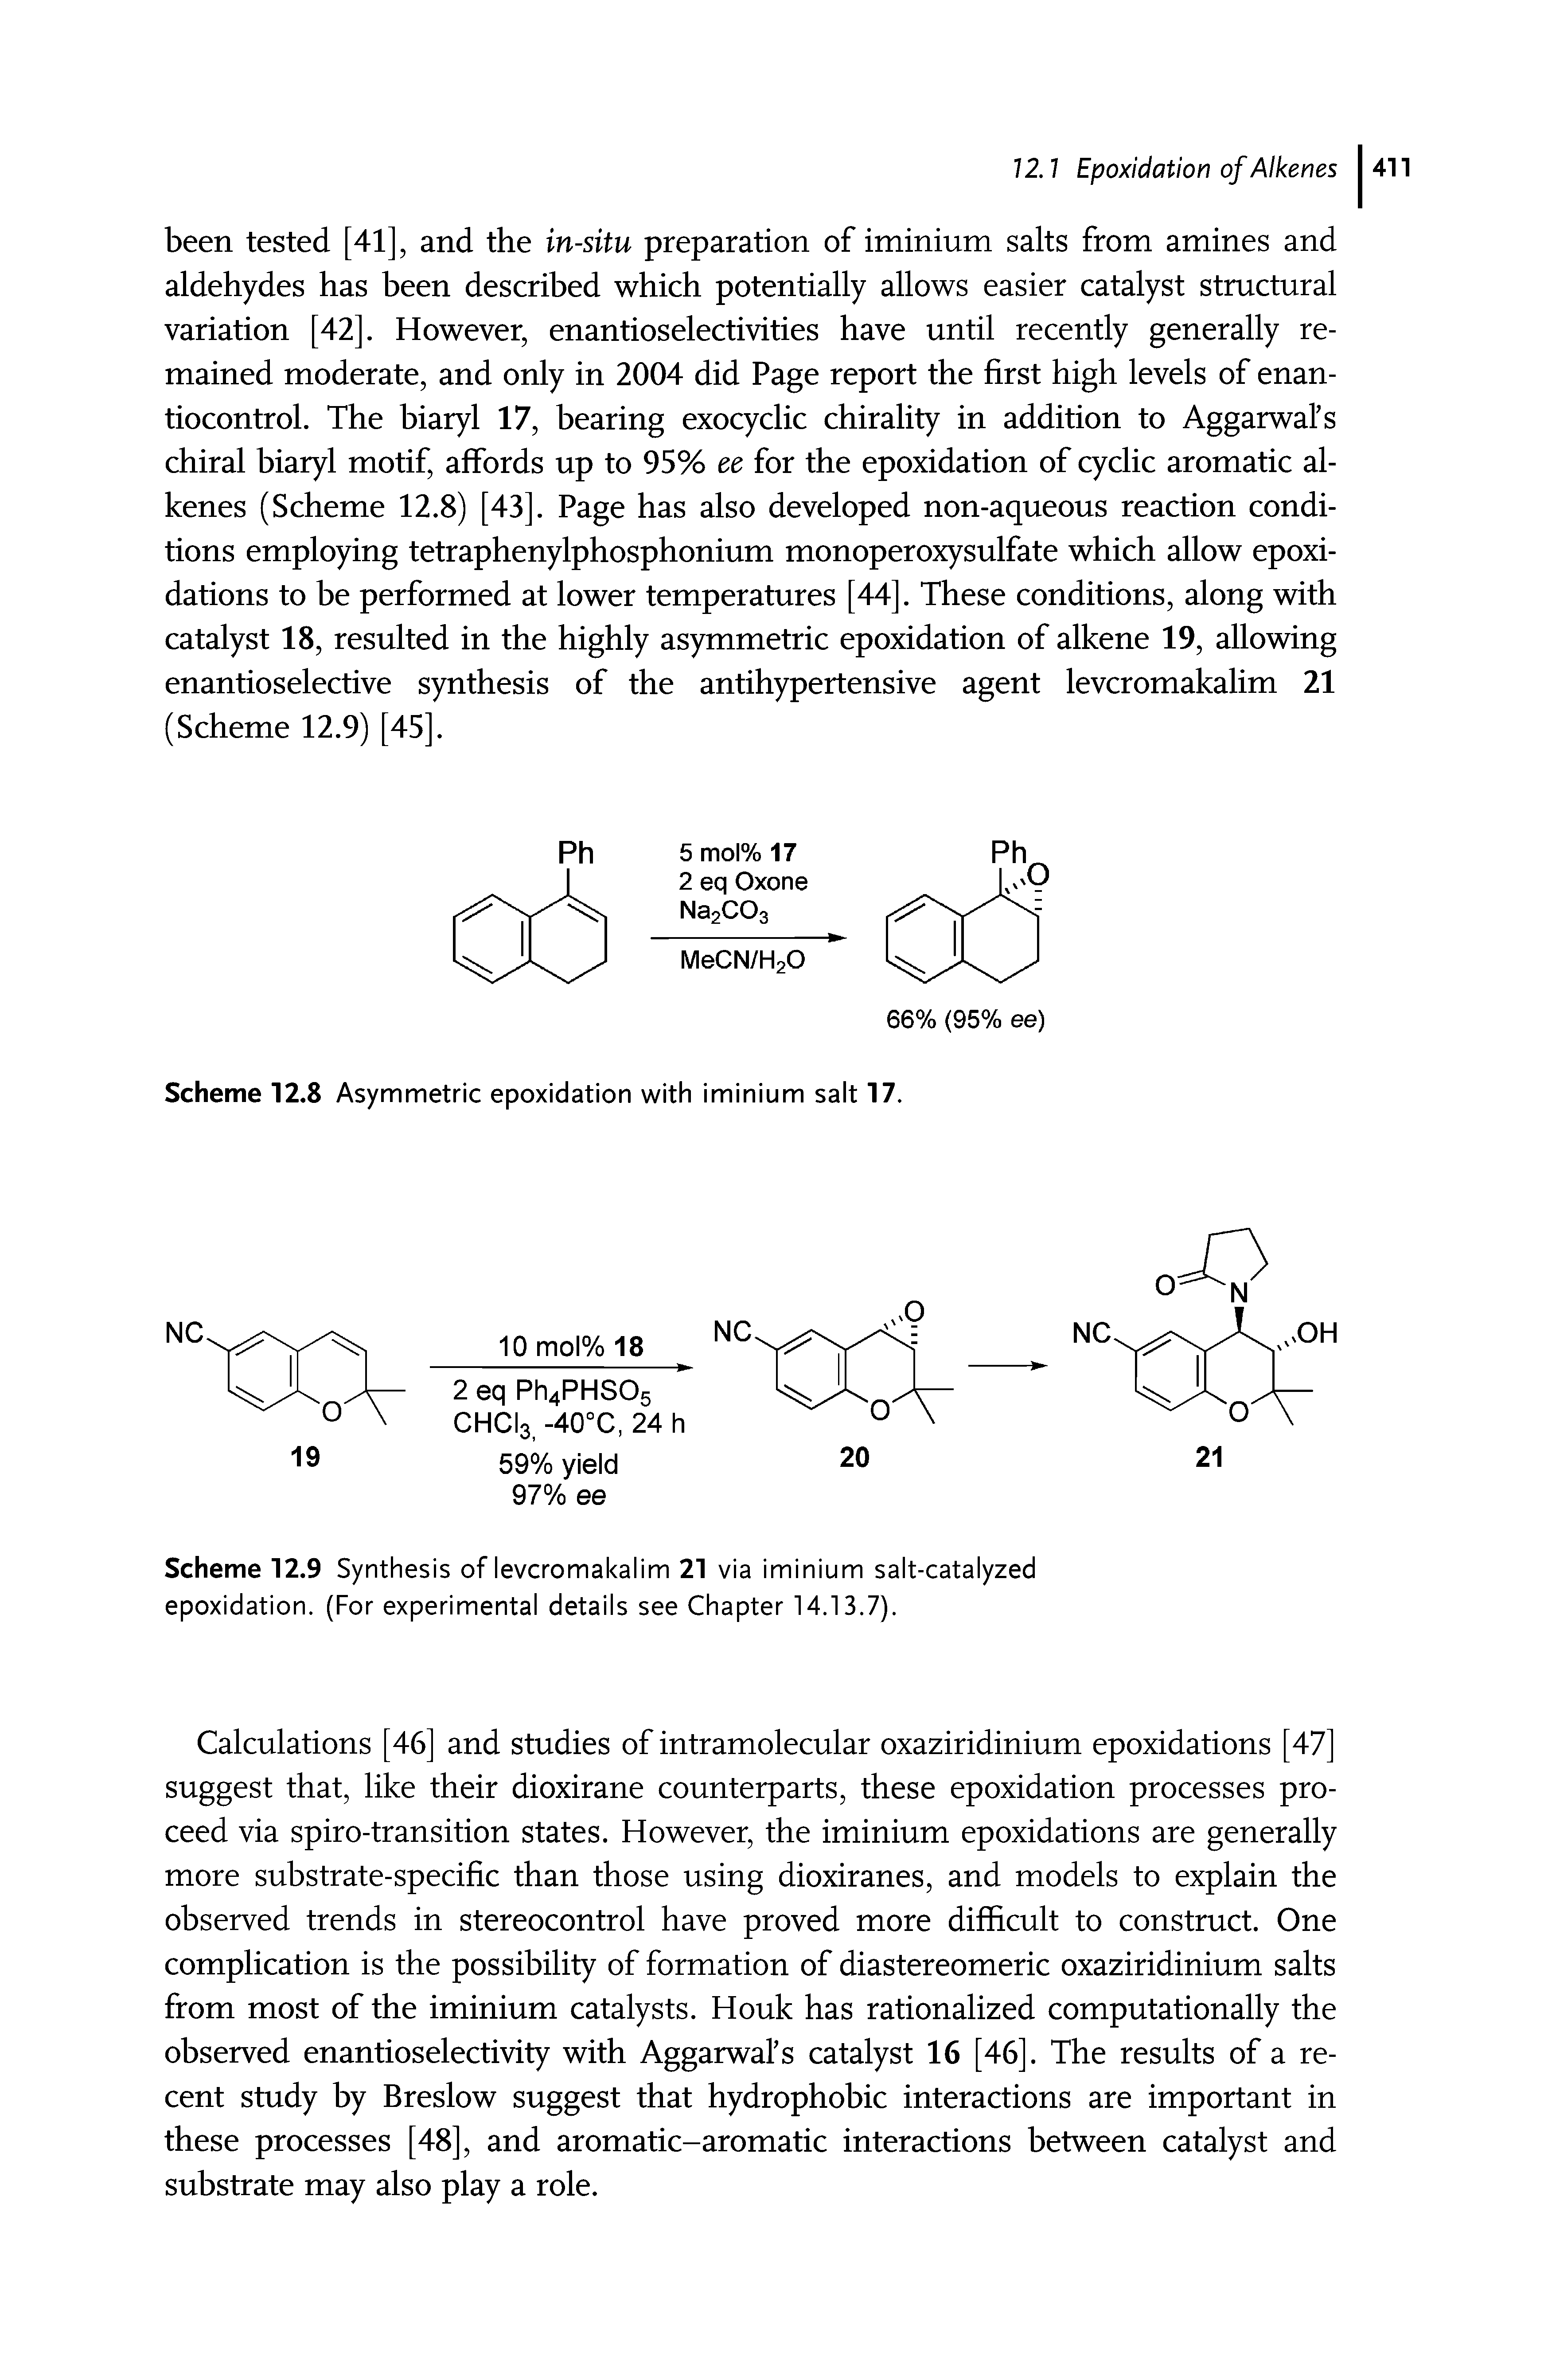 Scheme 12.8 Asymmetric epoxidation with iminium salt 17.